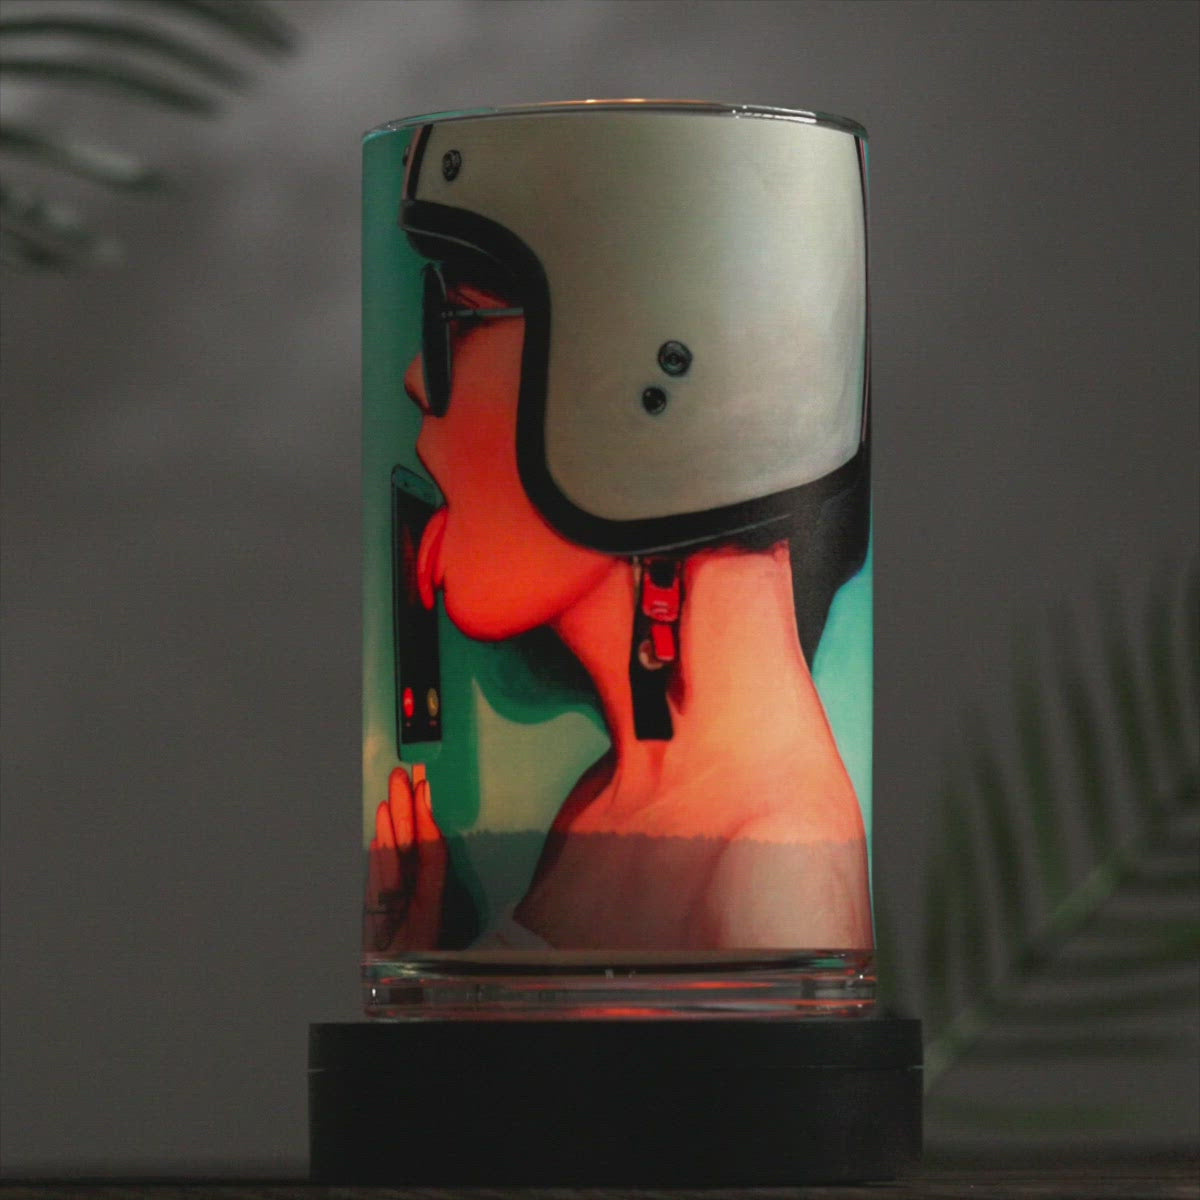 Atomra Home ''Phone cream licking'' glass candle, vase, holder, white, blue, long burning time, interior design, zero waste, DIY, 2022